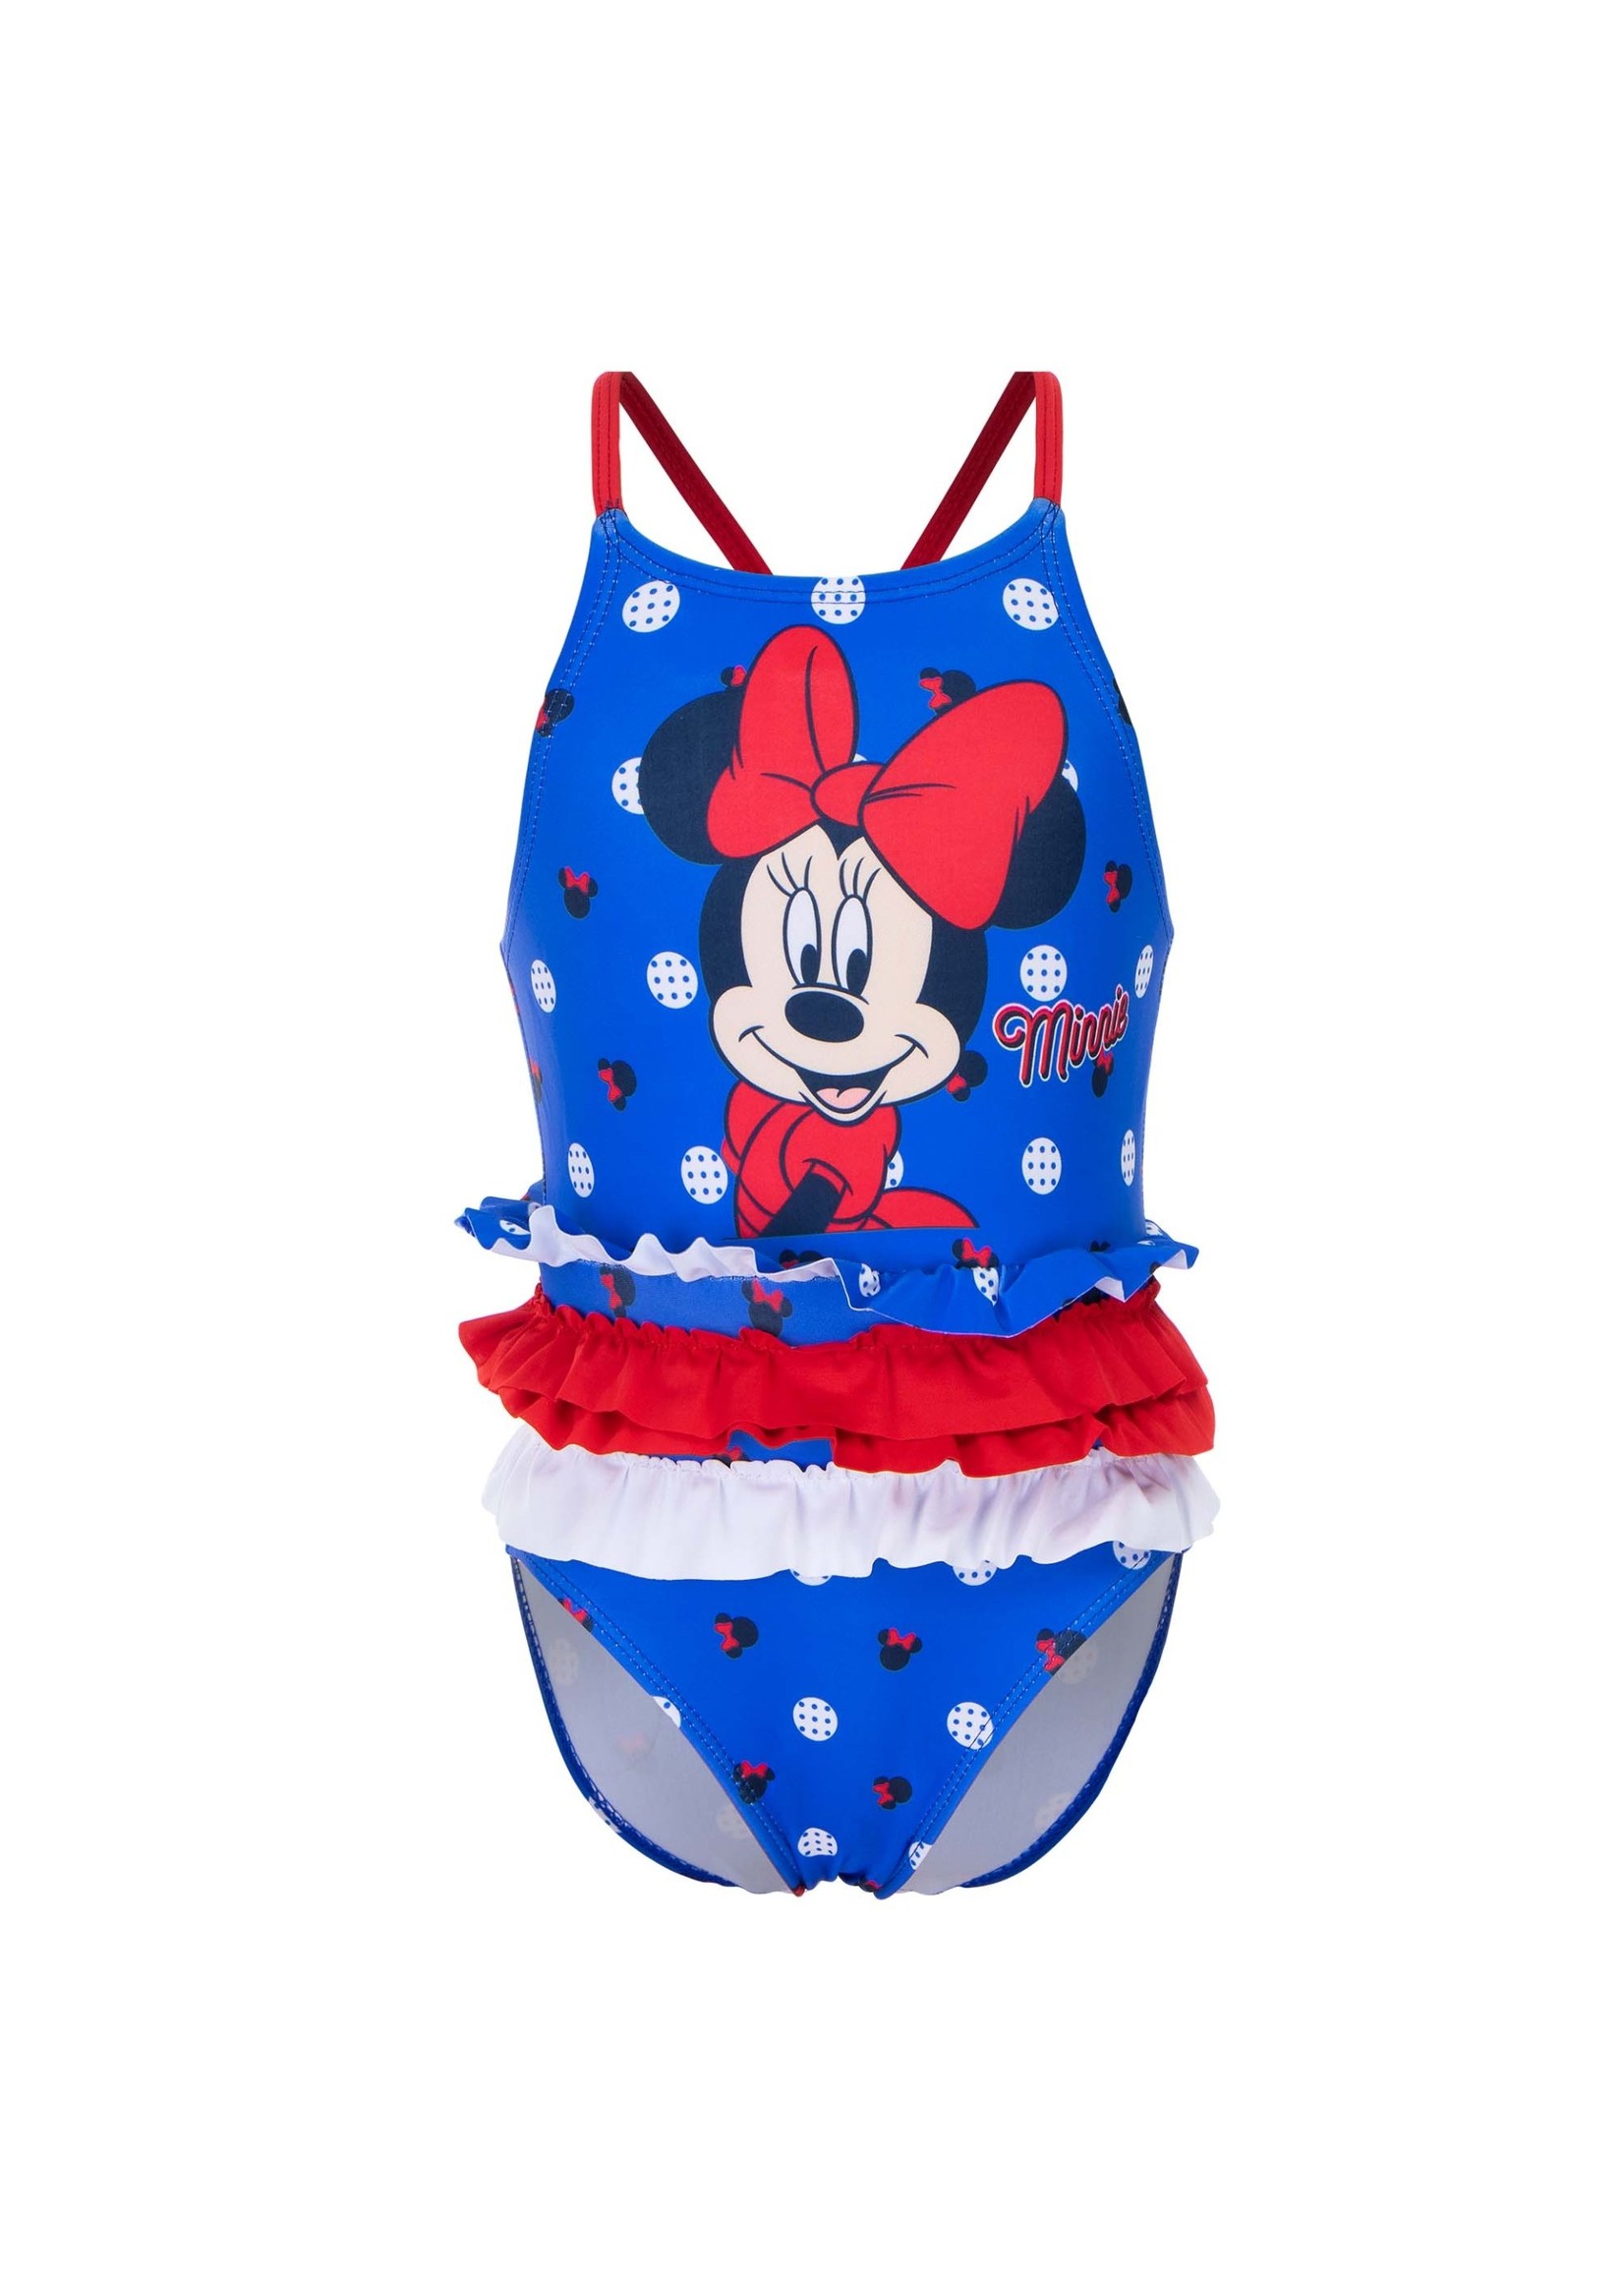 Disney baby Minnie Mouse badpak van Disney baby blauw